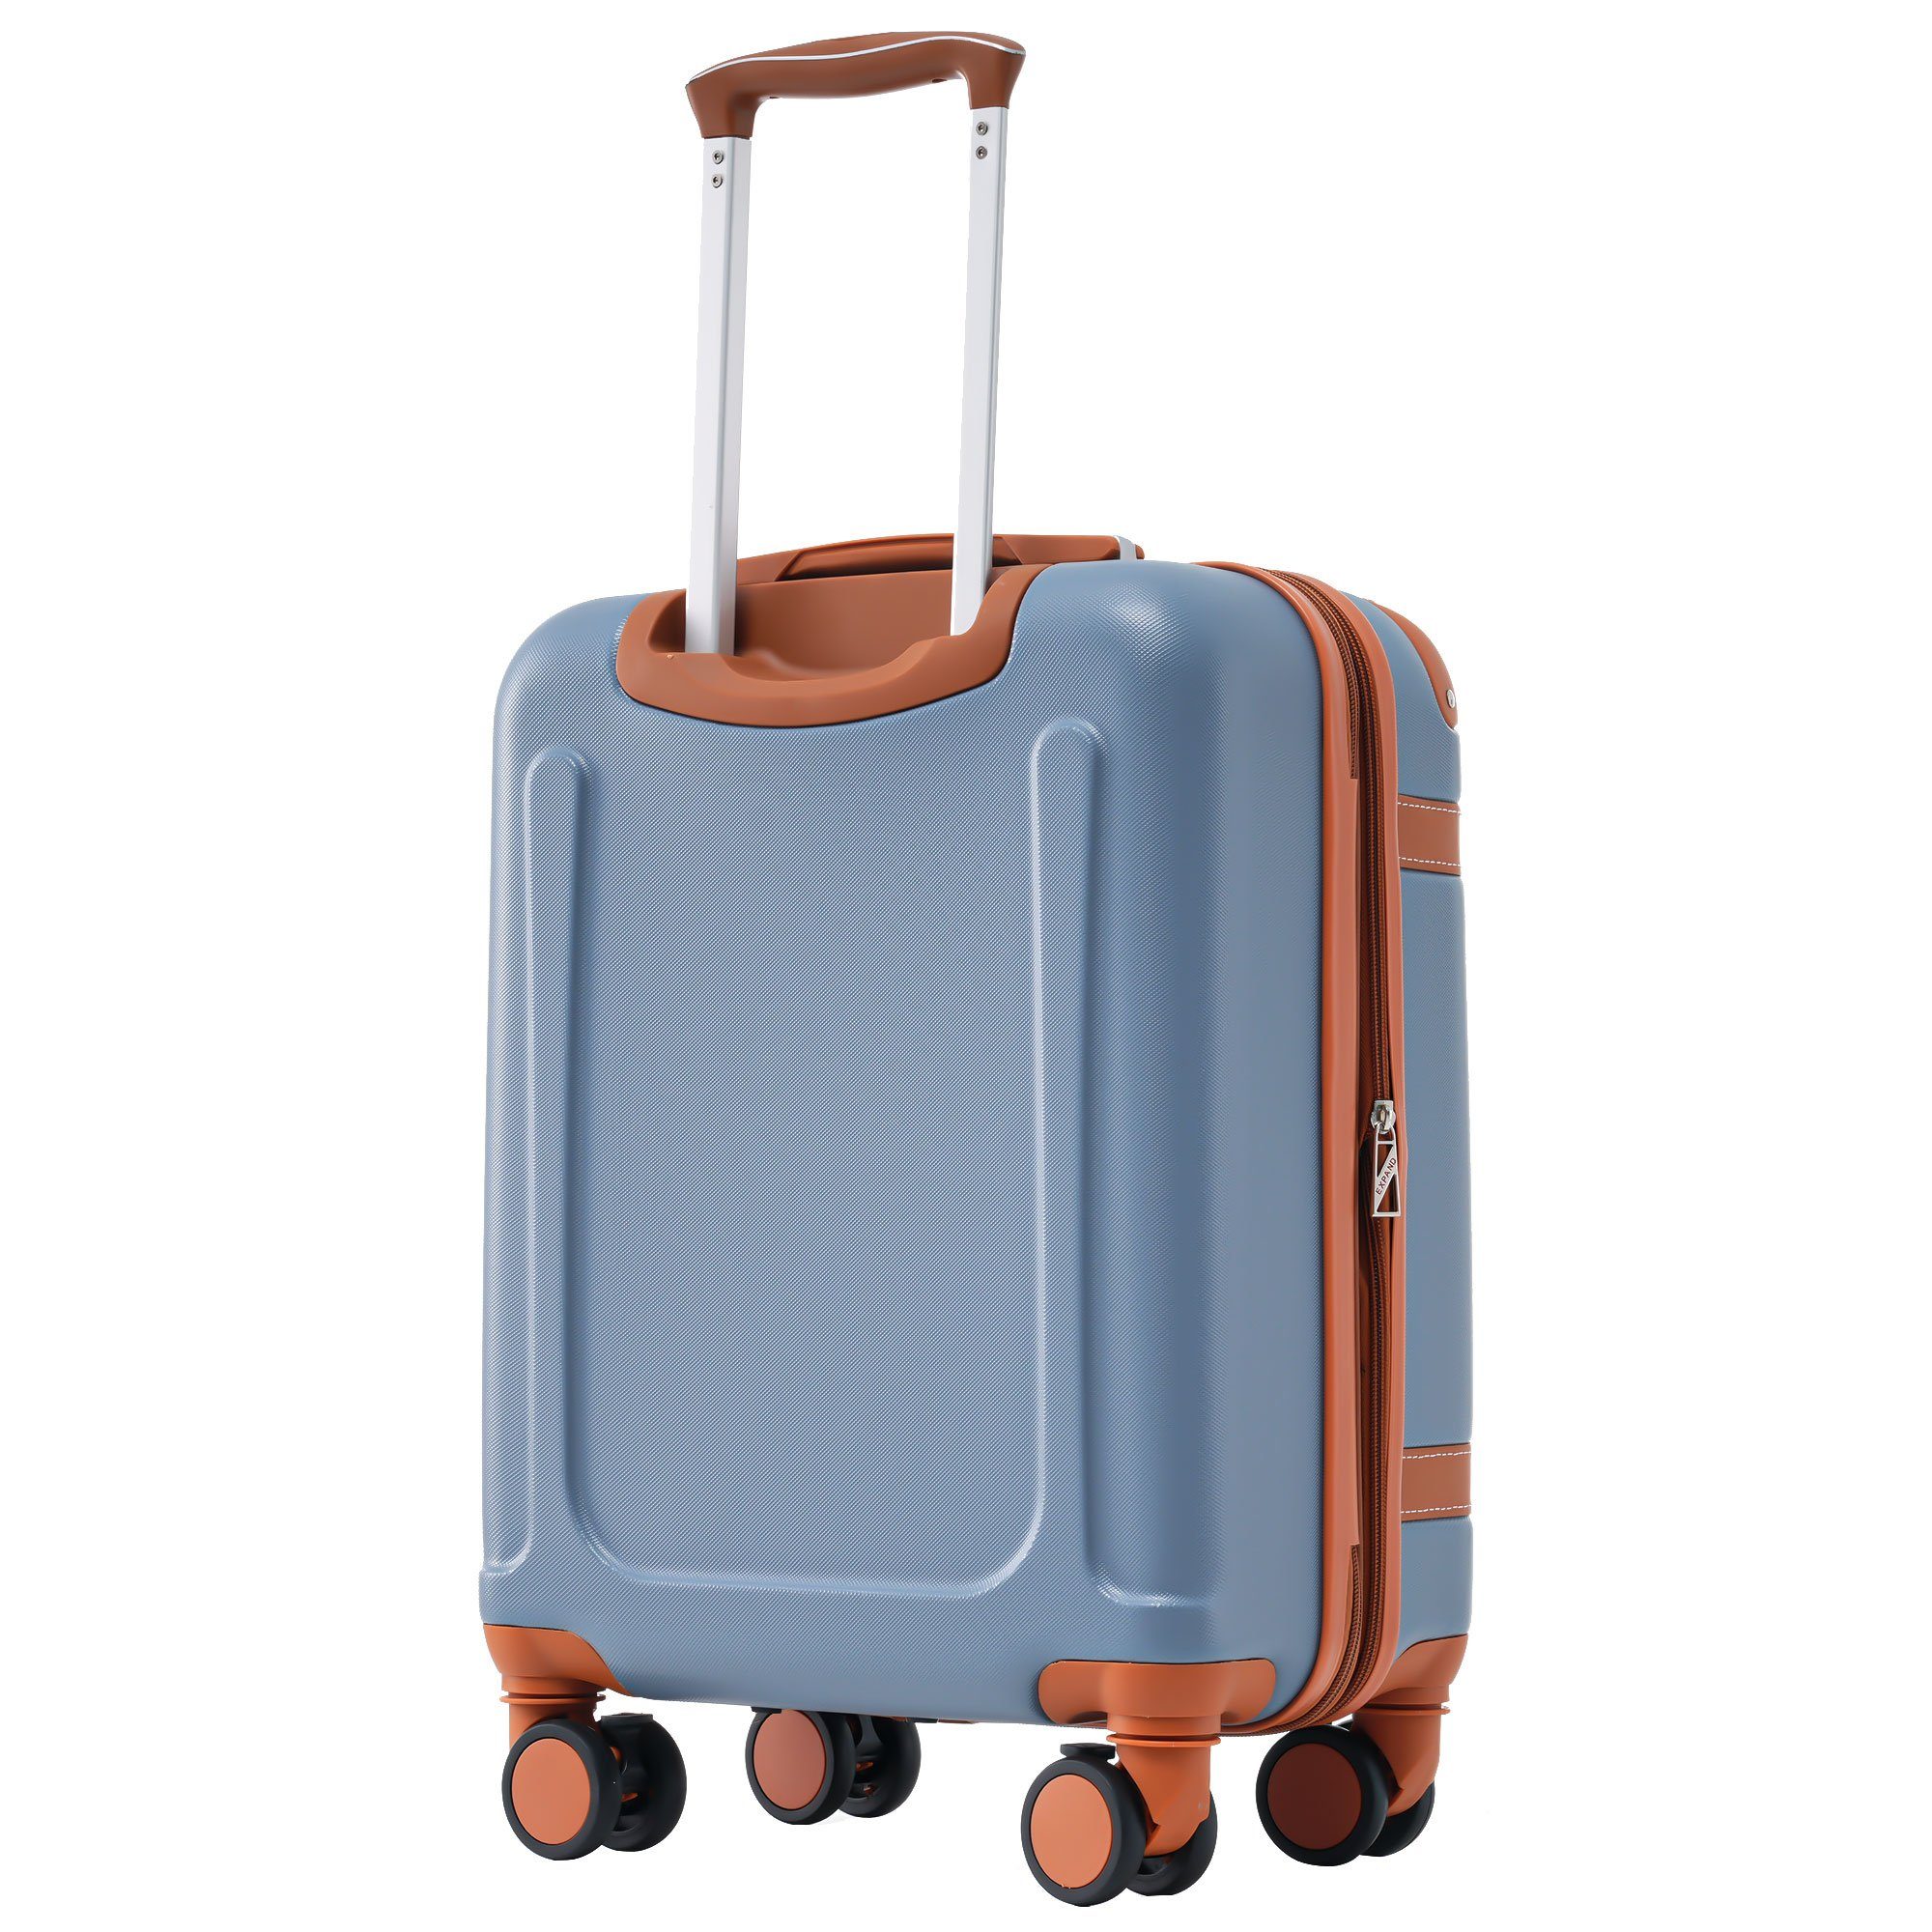 Flieks Koffer Rollen, TSA-Schloss Trolley 4 Gepäck, Handgepäck erweiterbar, Reise Dunstblau Hartschalen-Trolley,